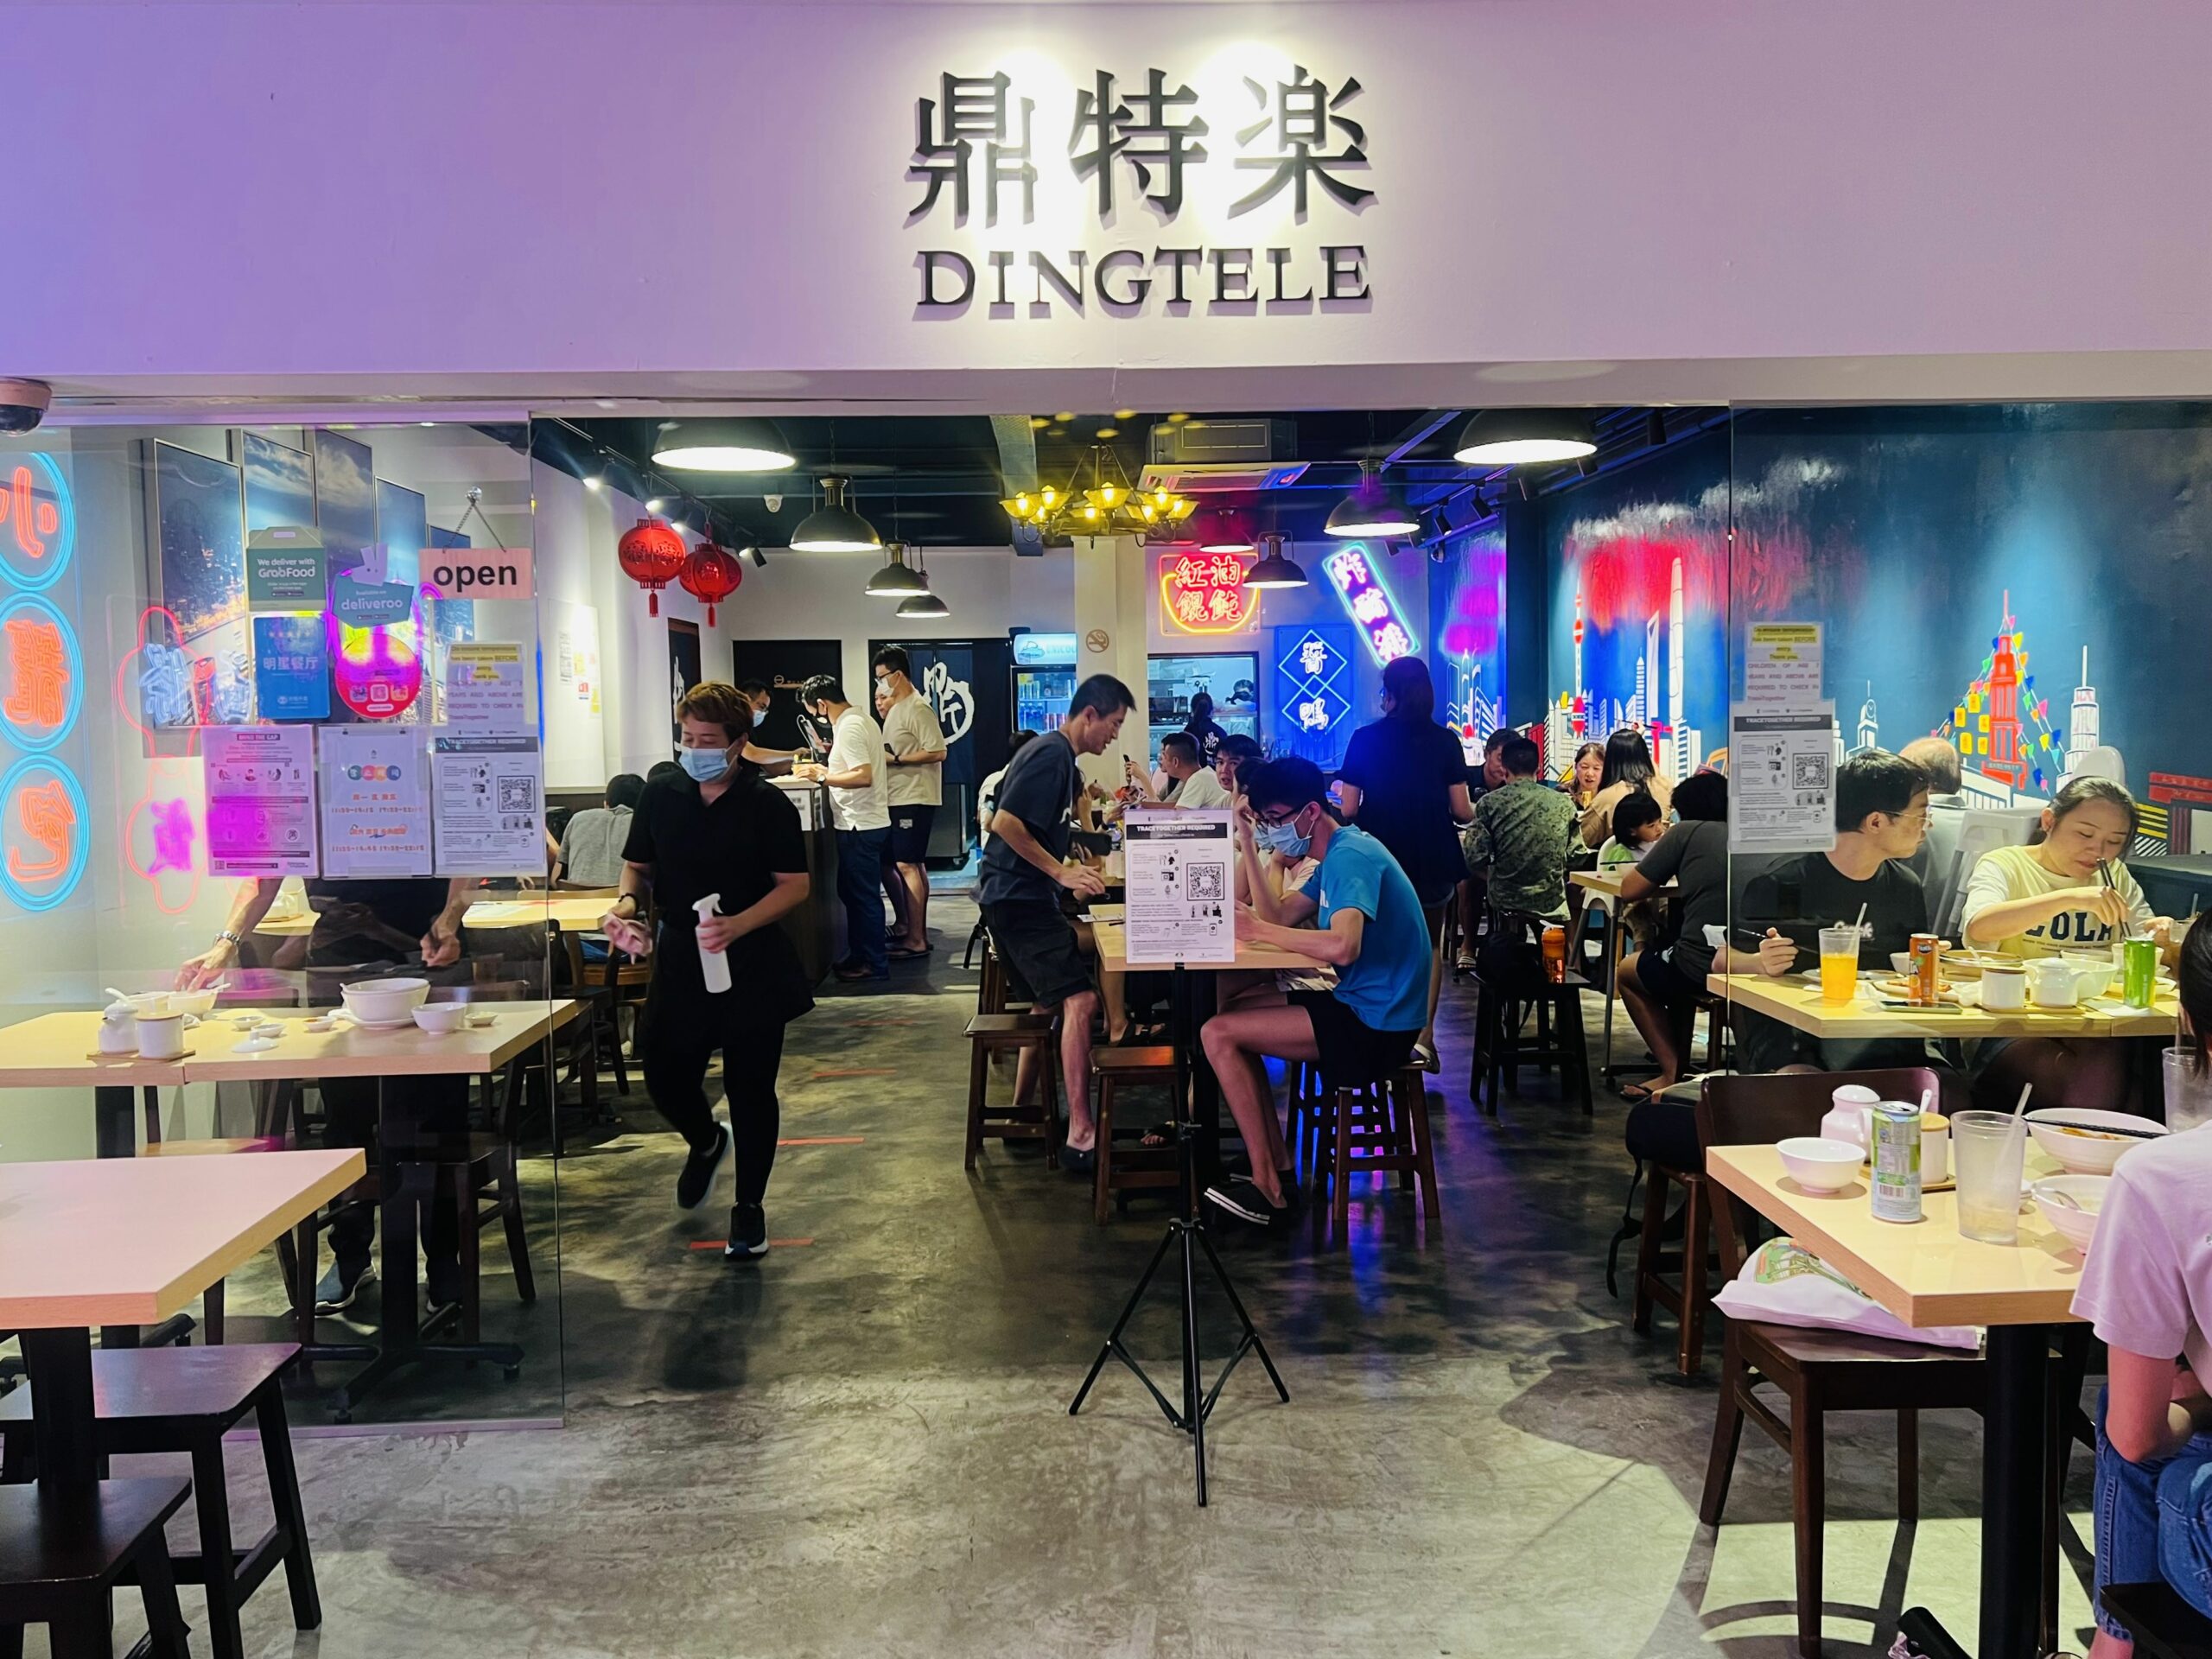 Ding Tele Shanghai Panfried Dumpling - Restaurant Front